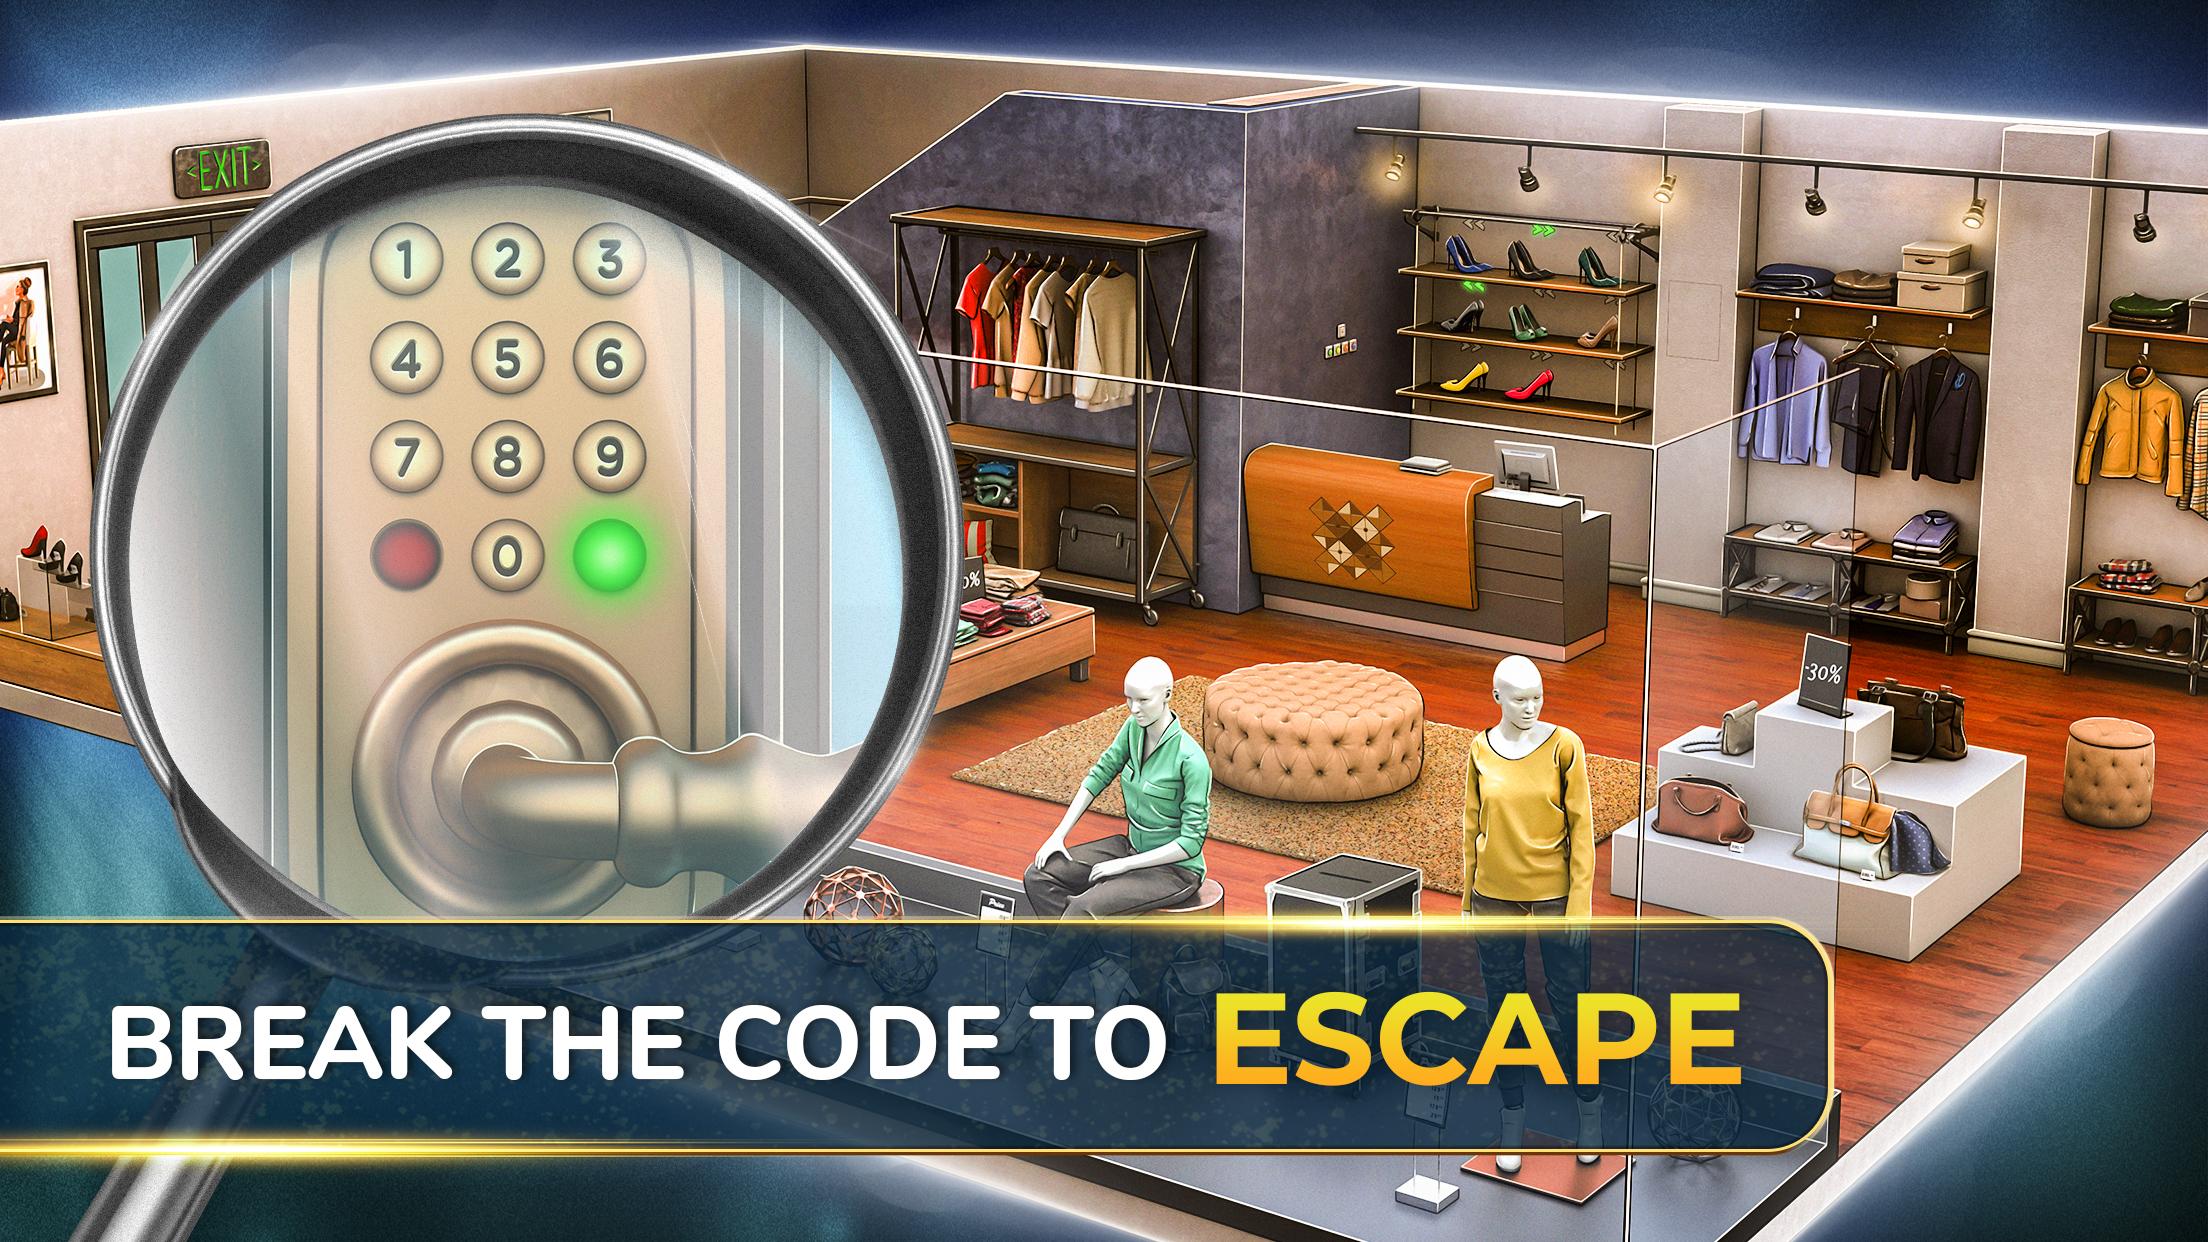 Rooms игра прохождение 7 уровень. Игра Rooms exits. Побег из комнаты Escape Room. The Room (игра). Побег из комнаты игра на андроид.